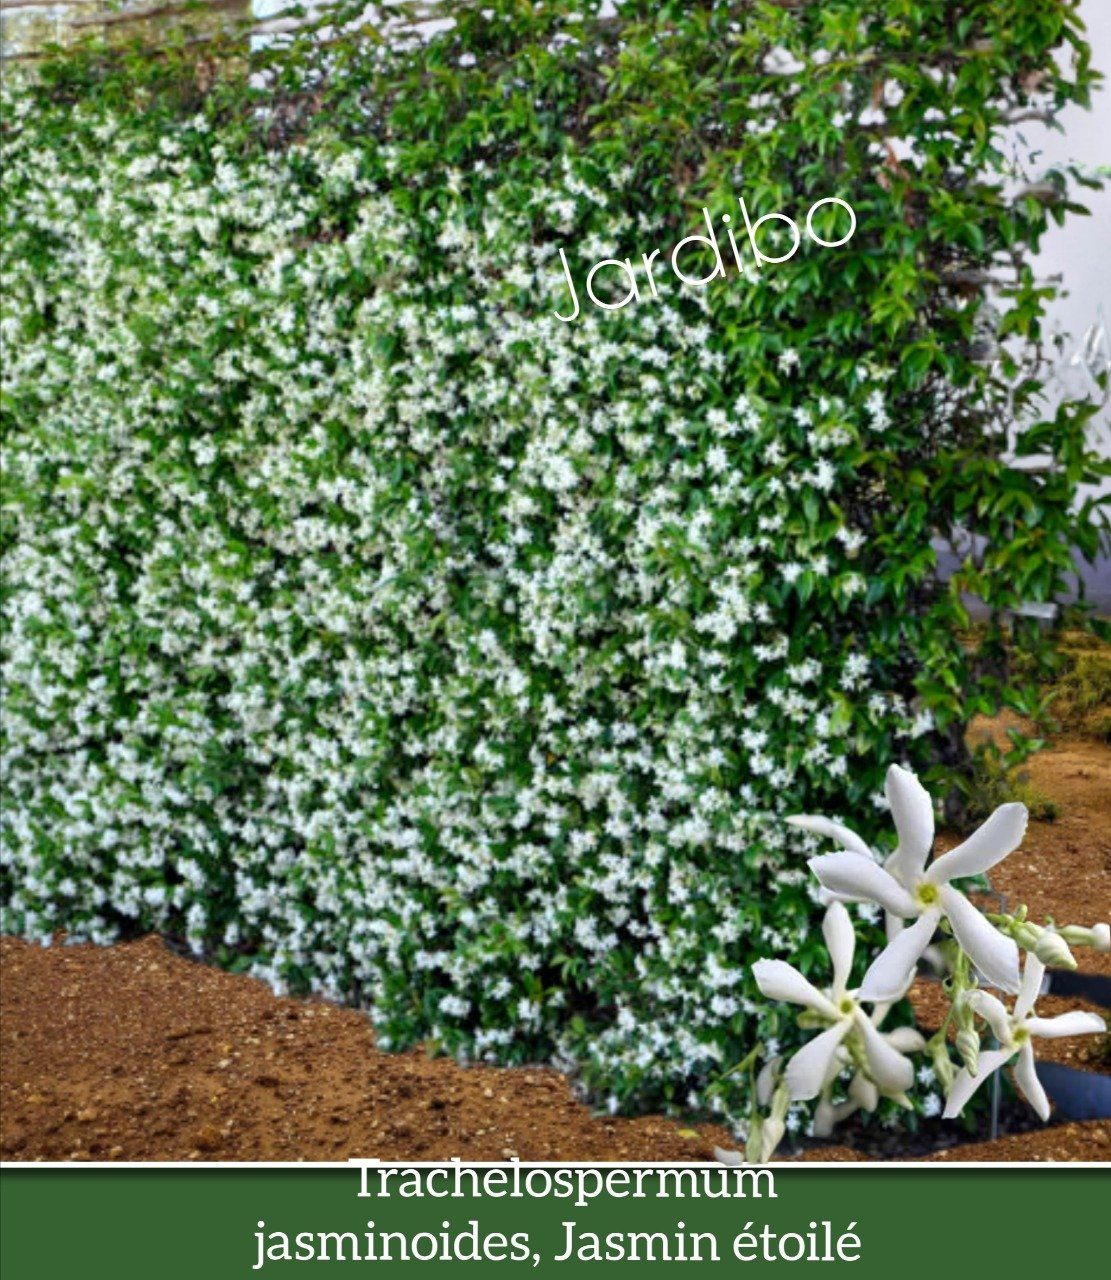 Trachelospermum jasminoides, Jasmin étoilé